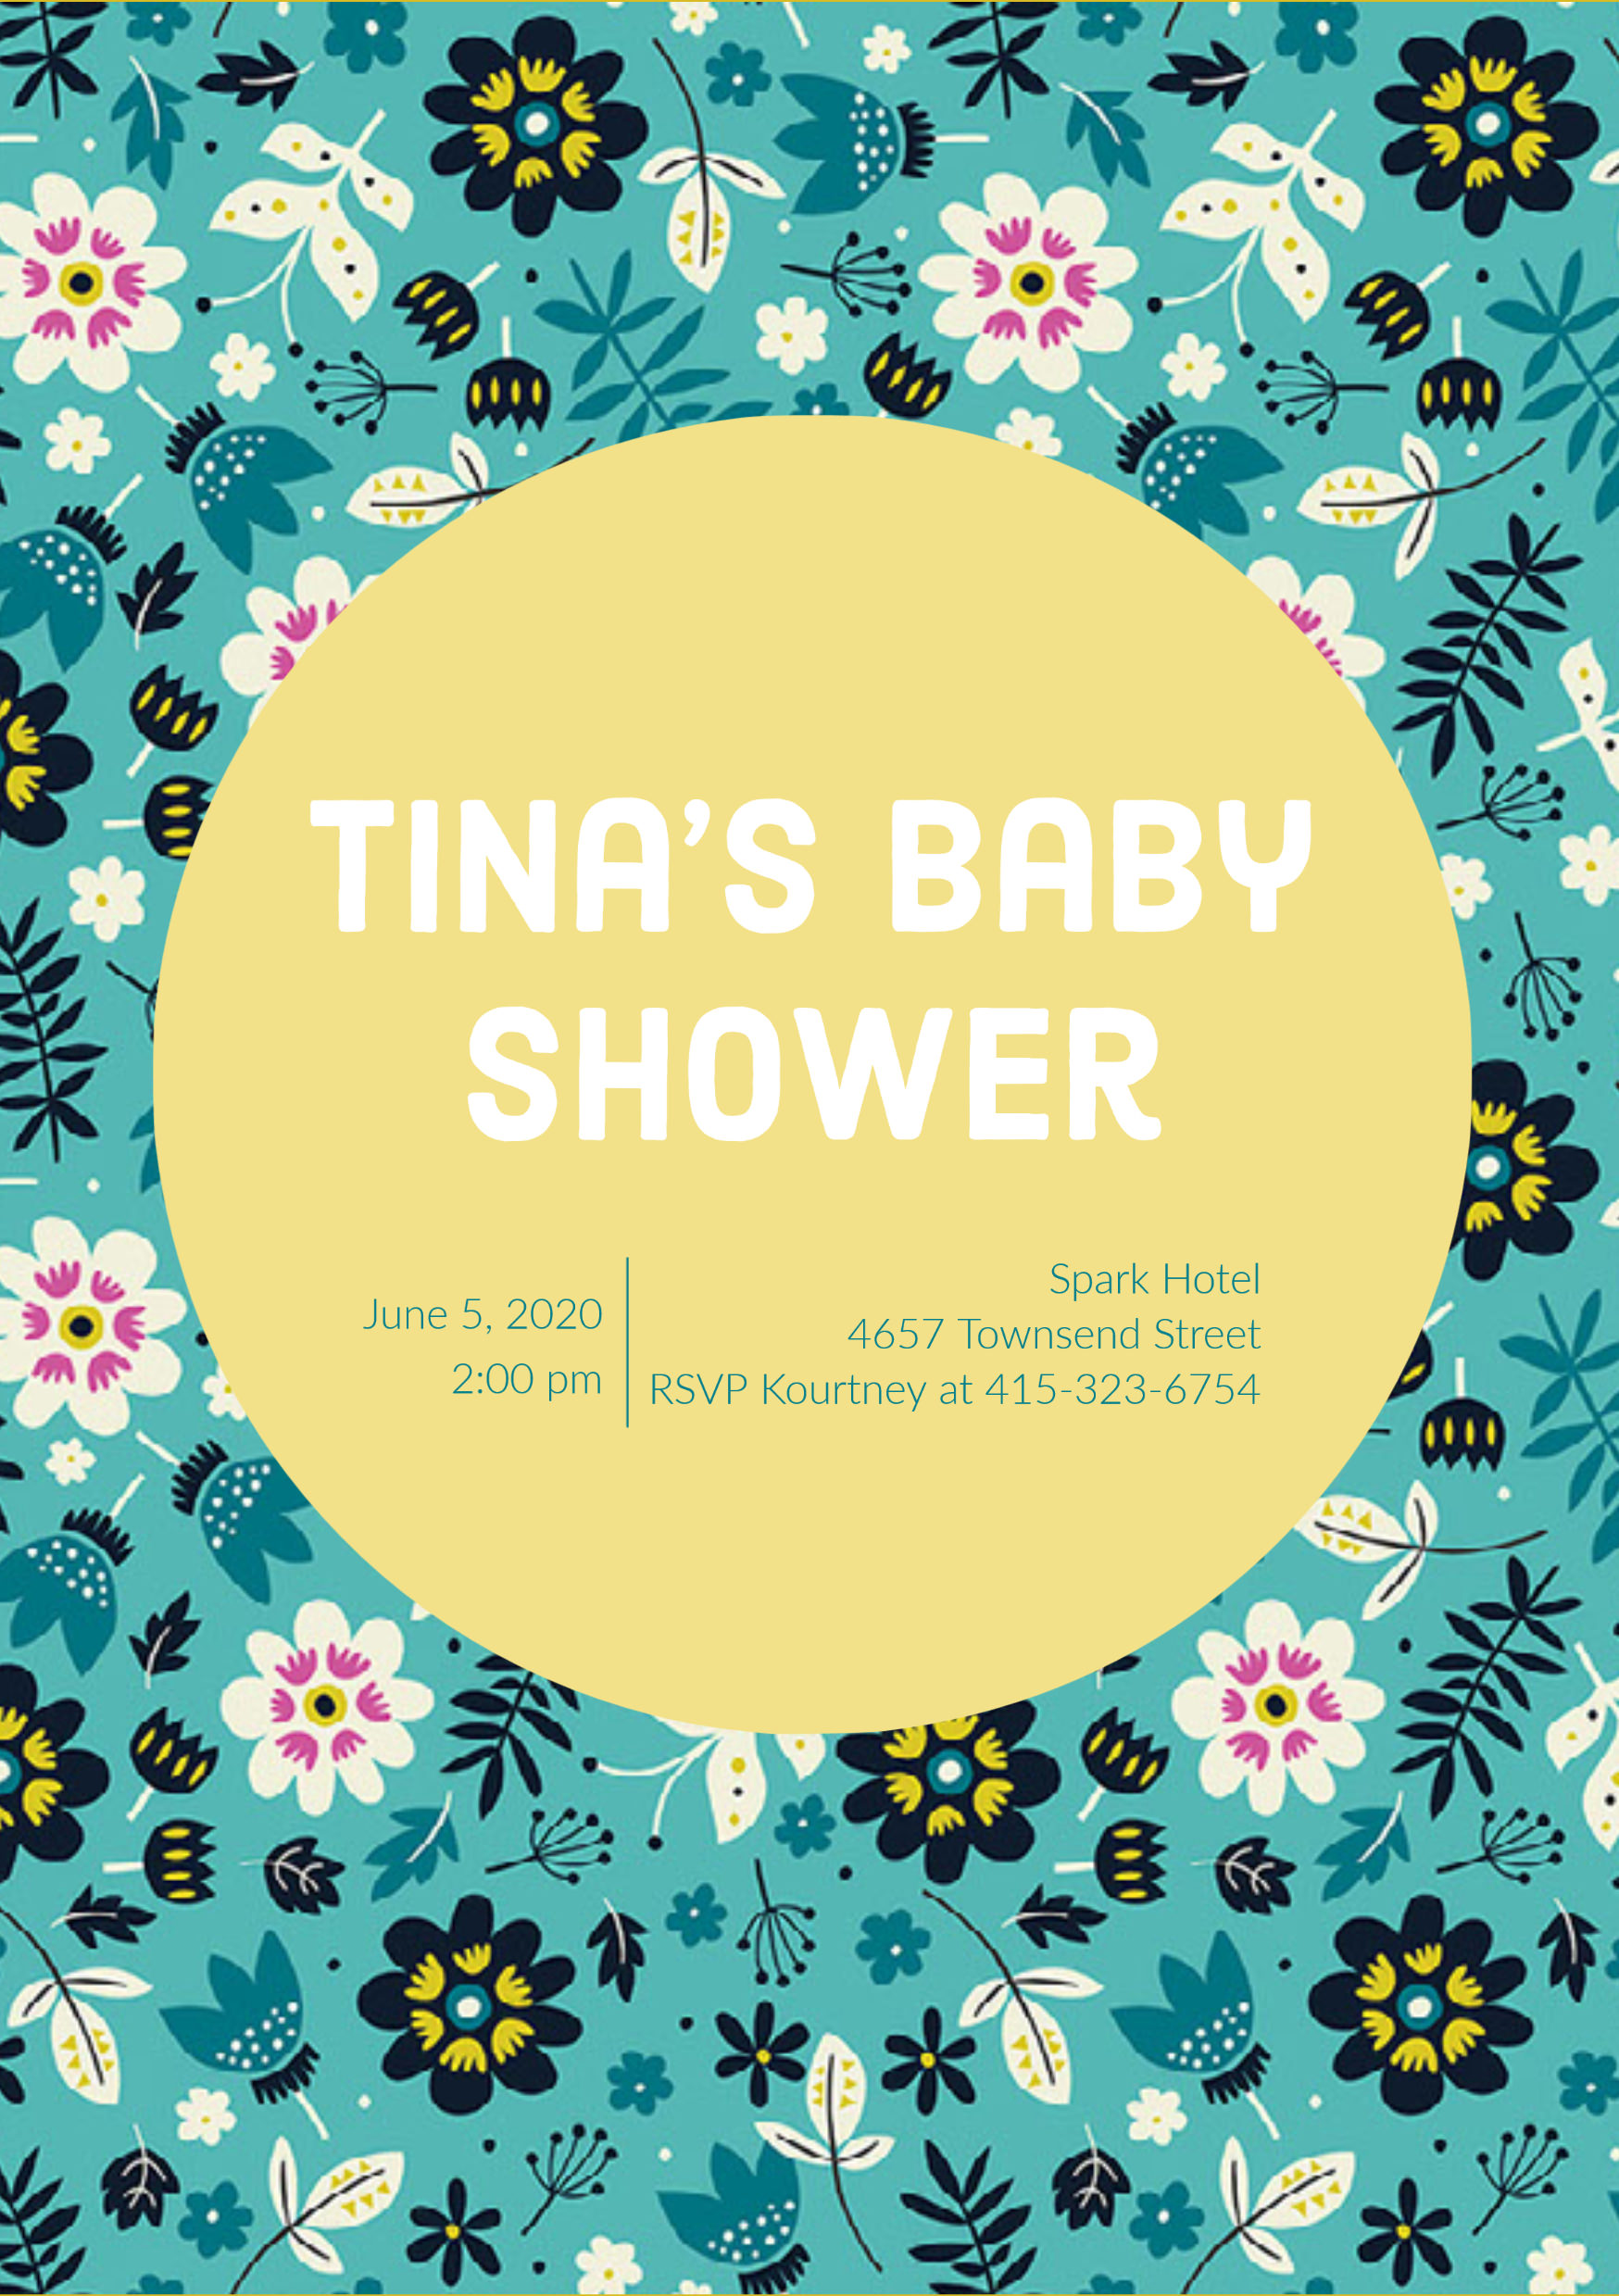 free-baby-shower-invitation-templates-dolanpedia-invitations-template